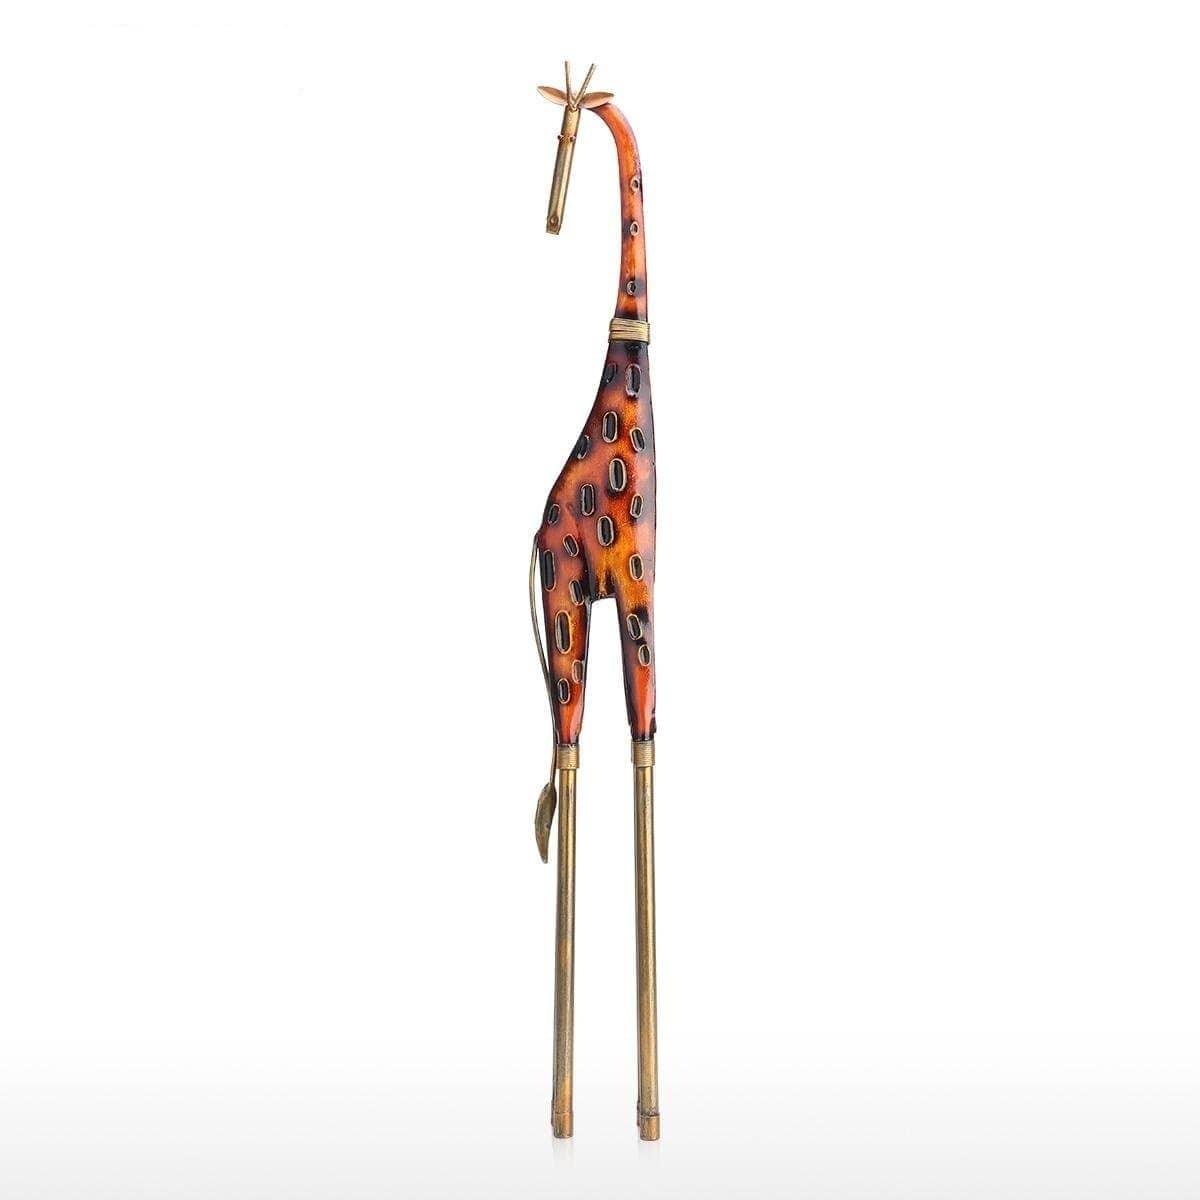 Hand-Craft Giraffe Art - Personalized & Artistic Home Decor Accessory